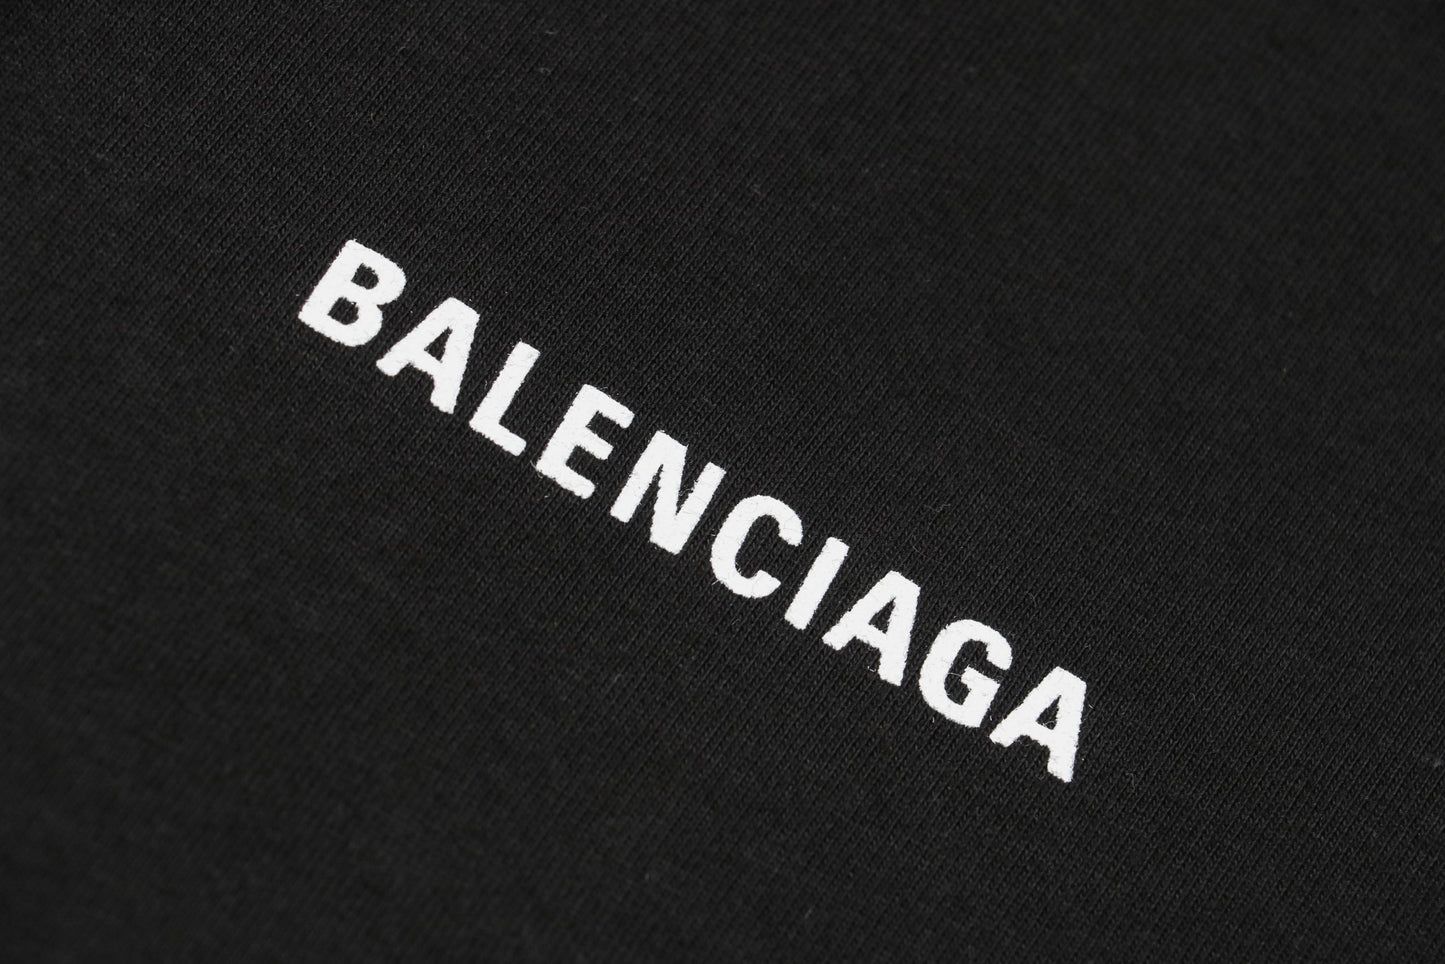 Balenci Logo T-Shirt Black